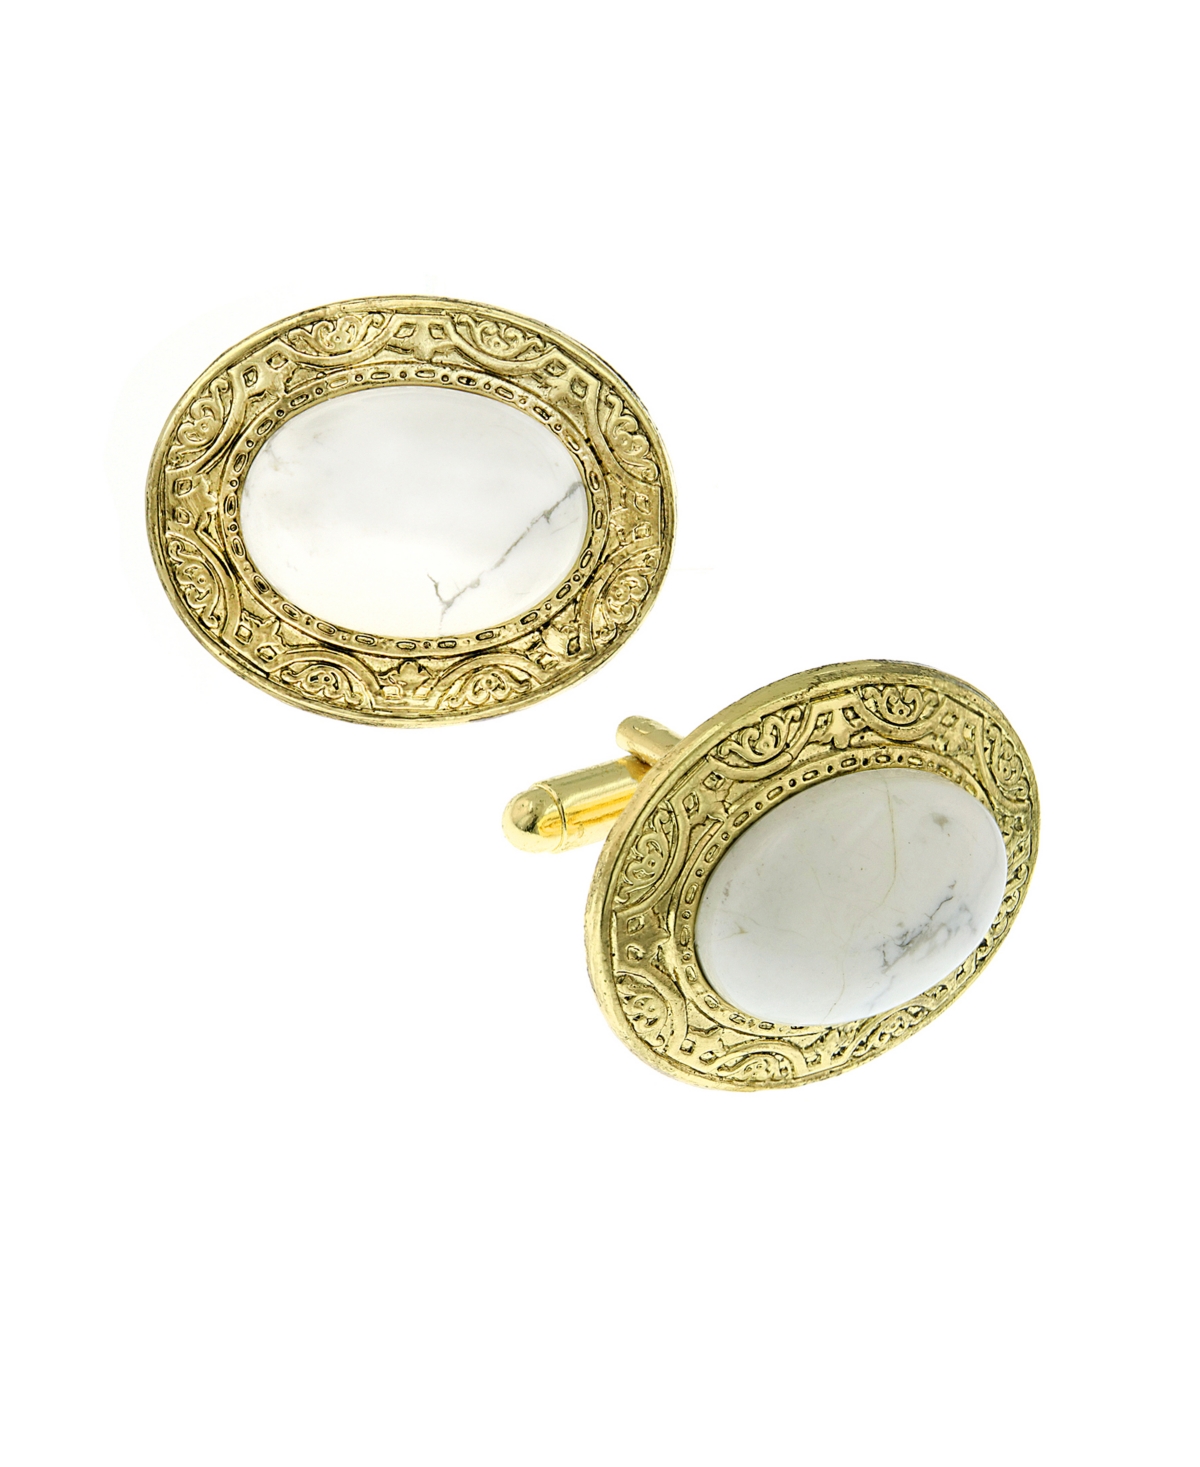 Jewelry 14K Gold Plated Semi-Precious Howlite Oval Cufflinks - White